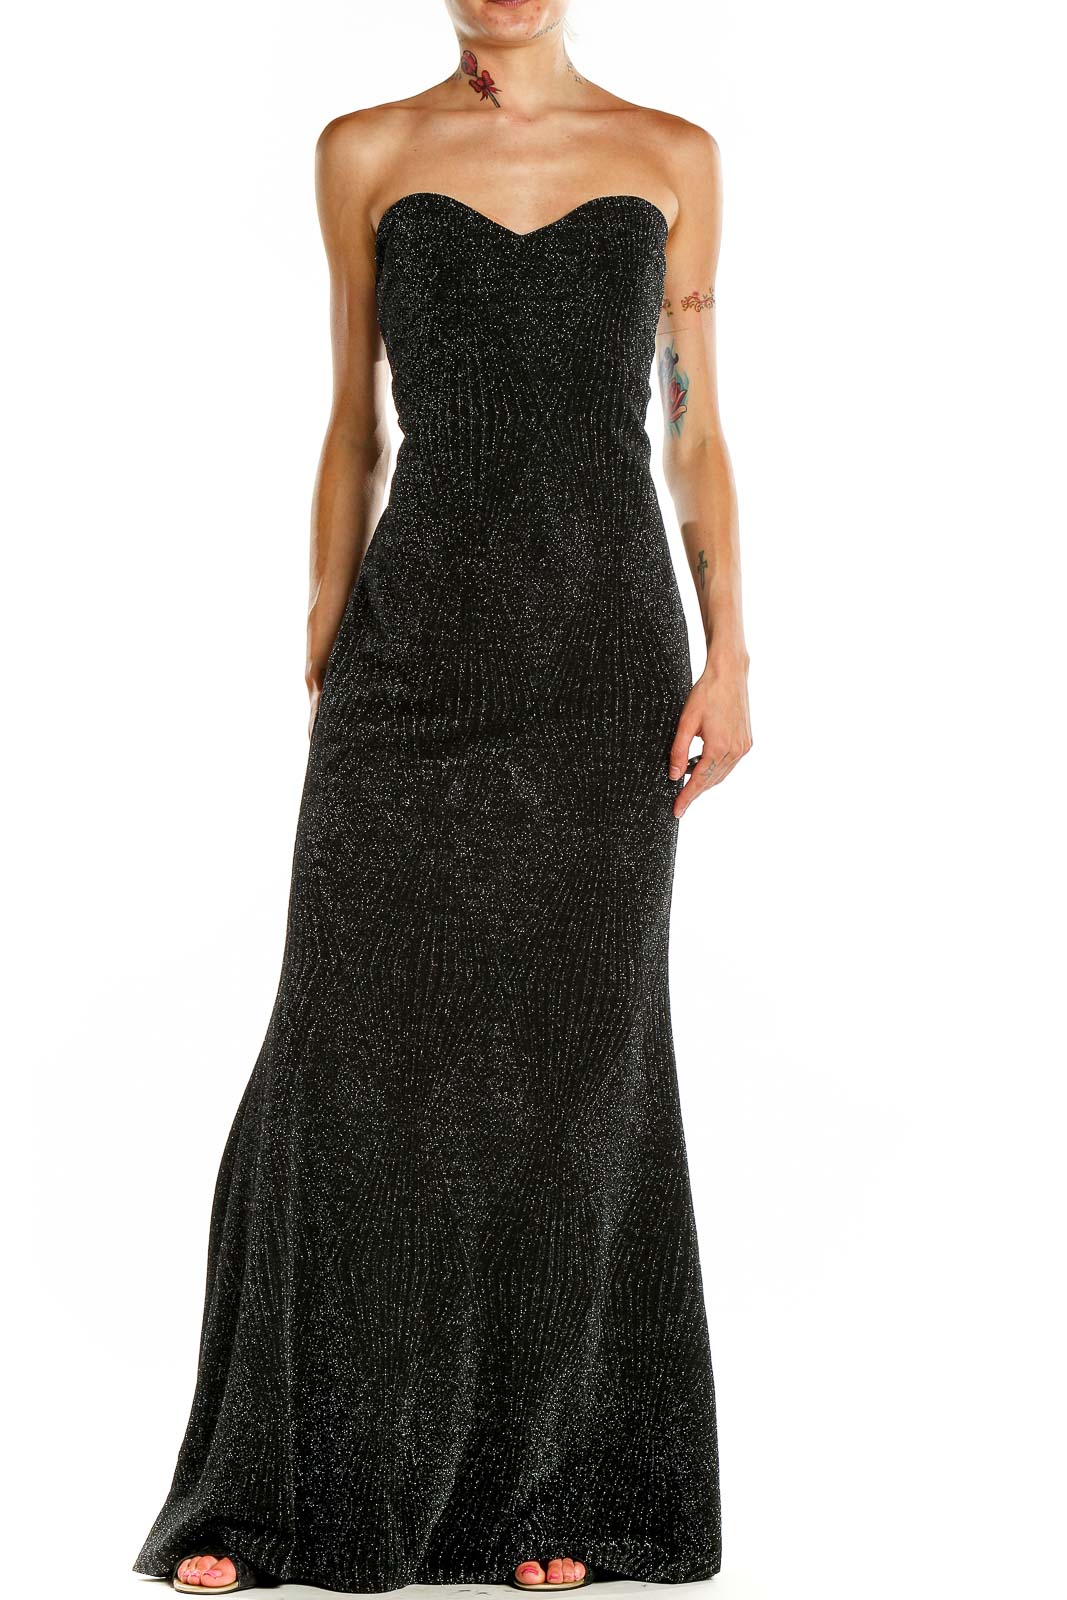 Black Strapless Shimmery Evening Dress Front